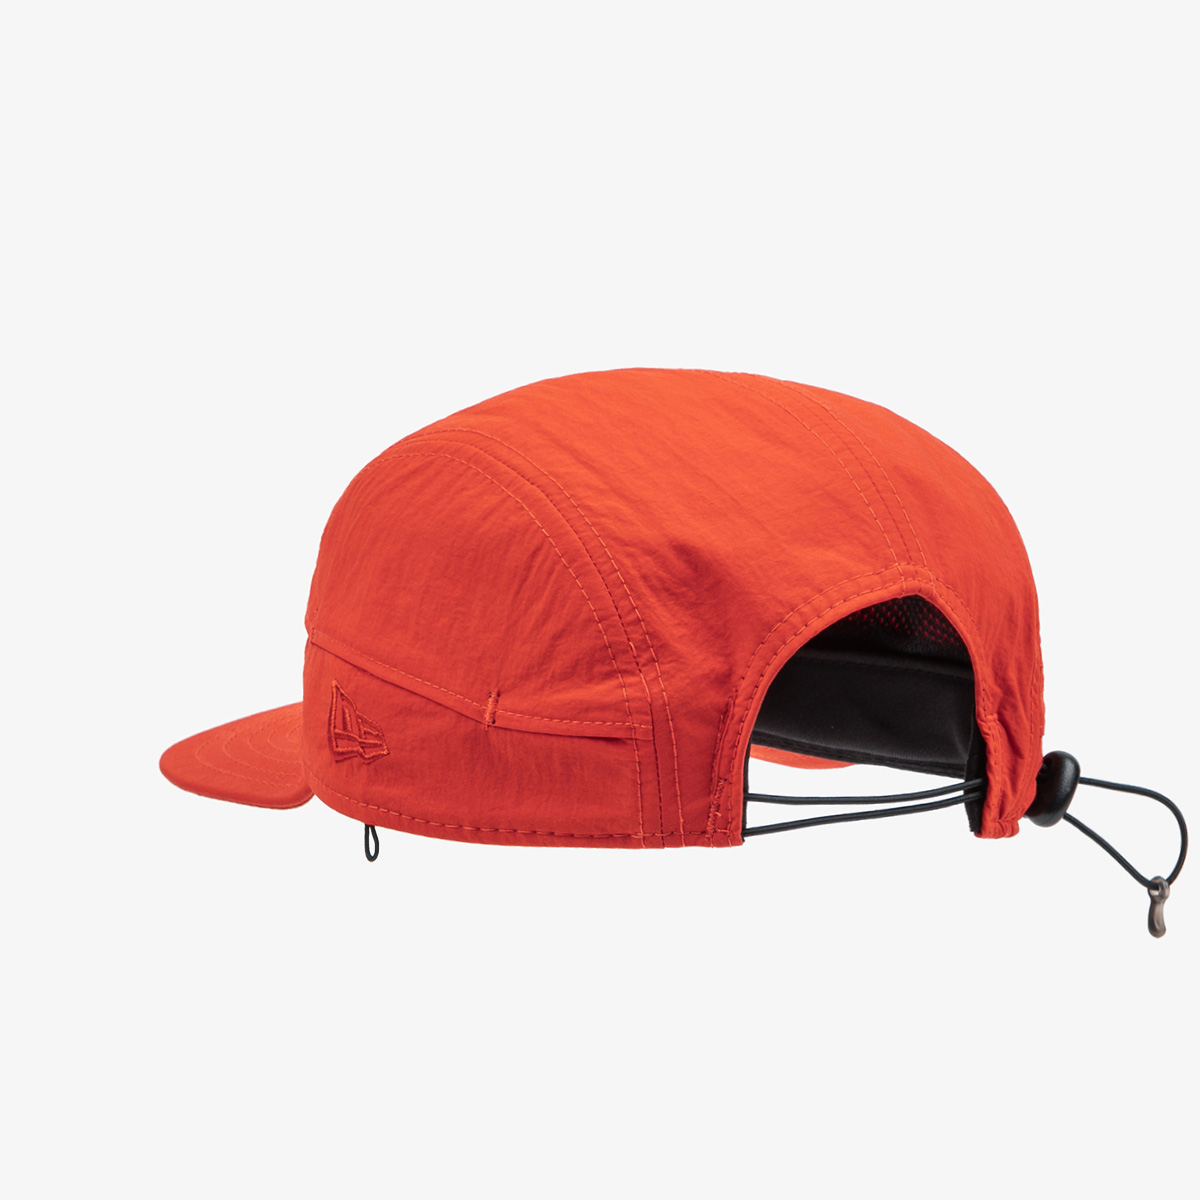 New Era Orange Packable Camper Cap